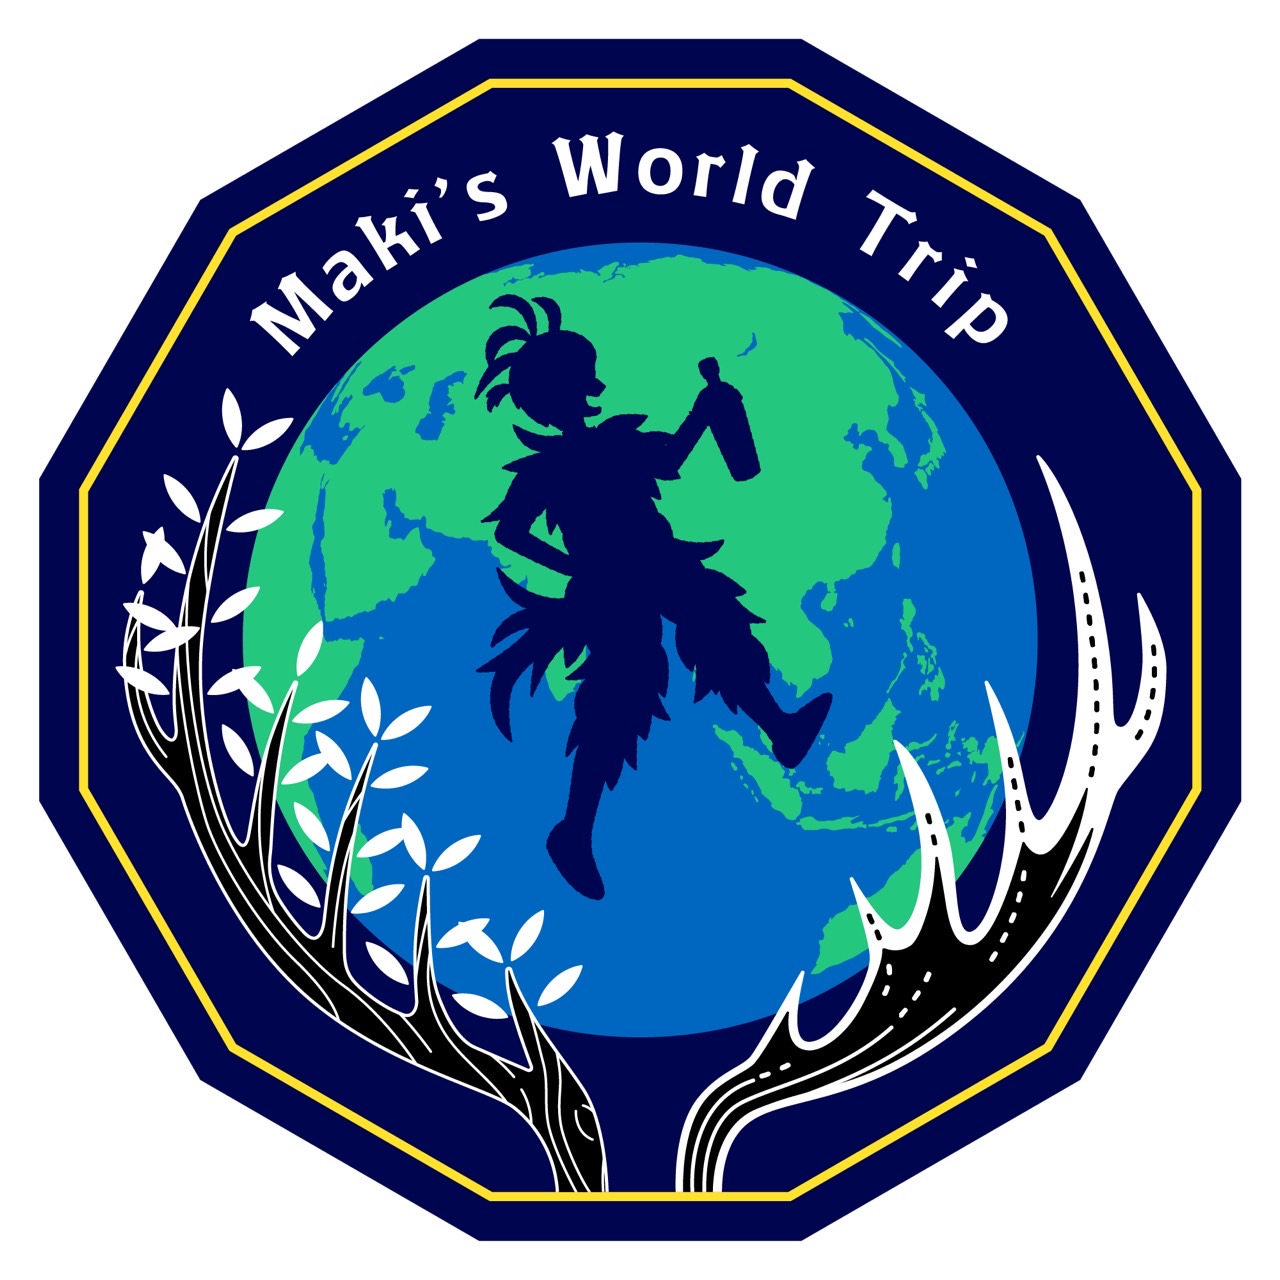 Maki’s 世界一周ブログ